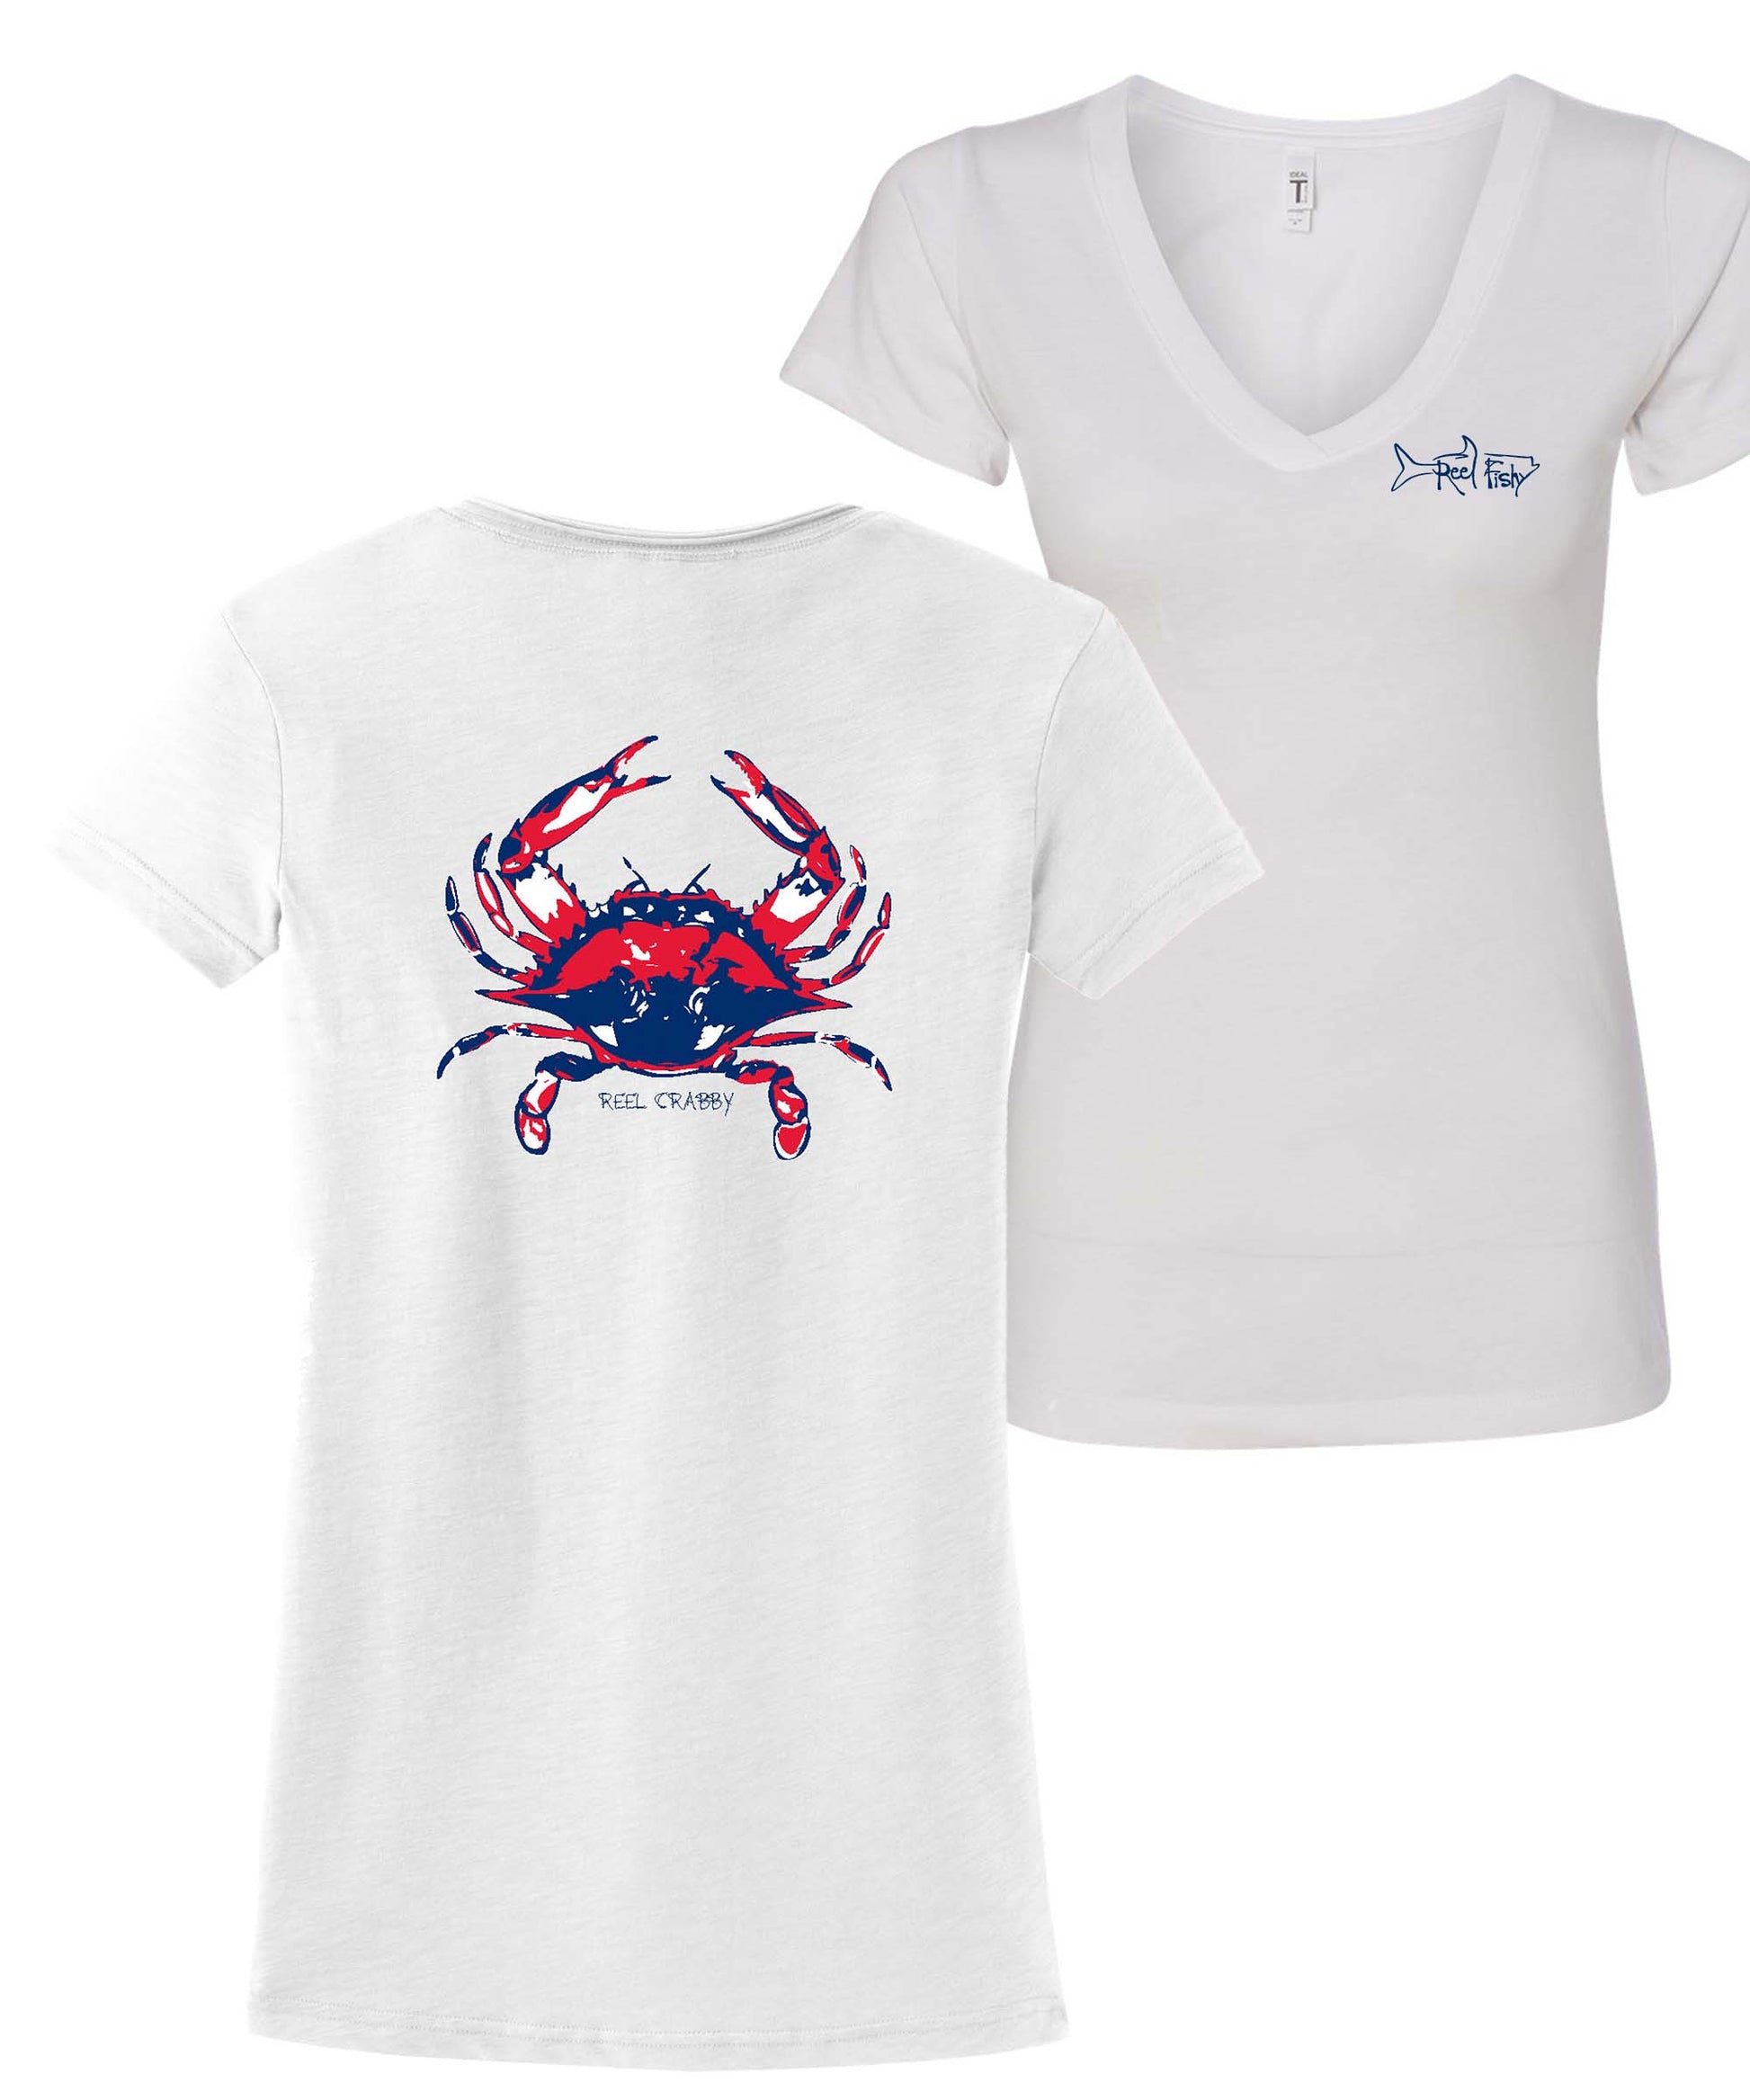 Ladies Crab V-neck Reel Crabby tee - White front & back